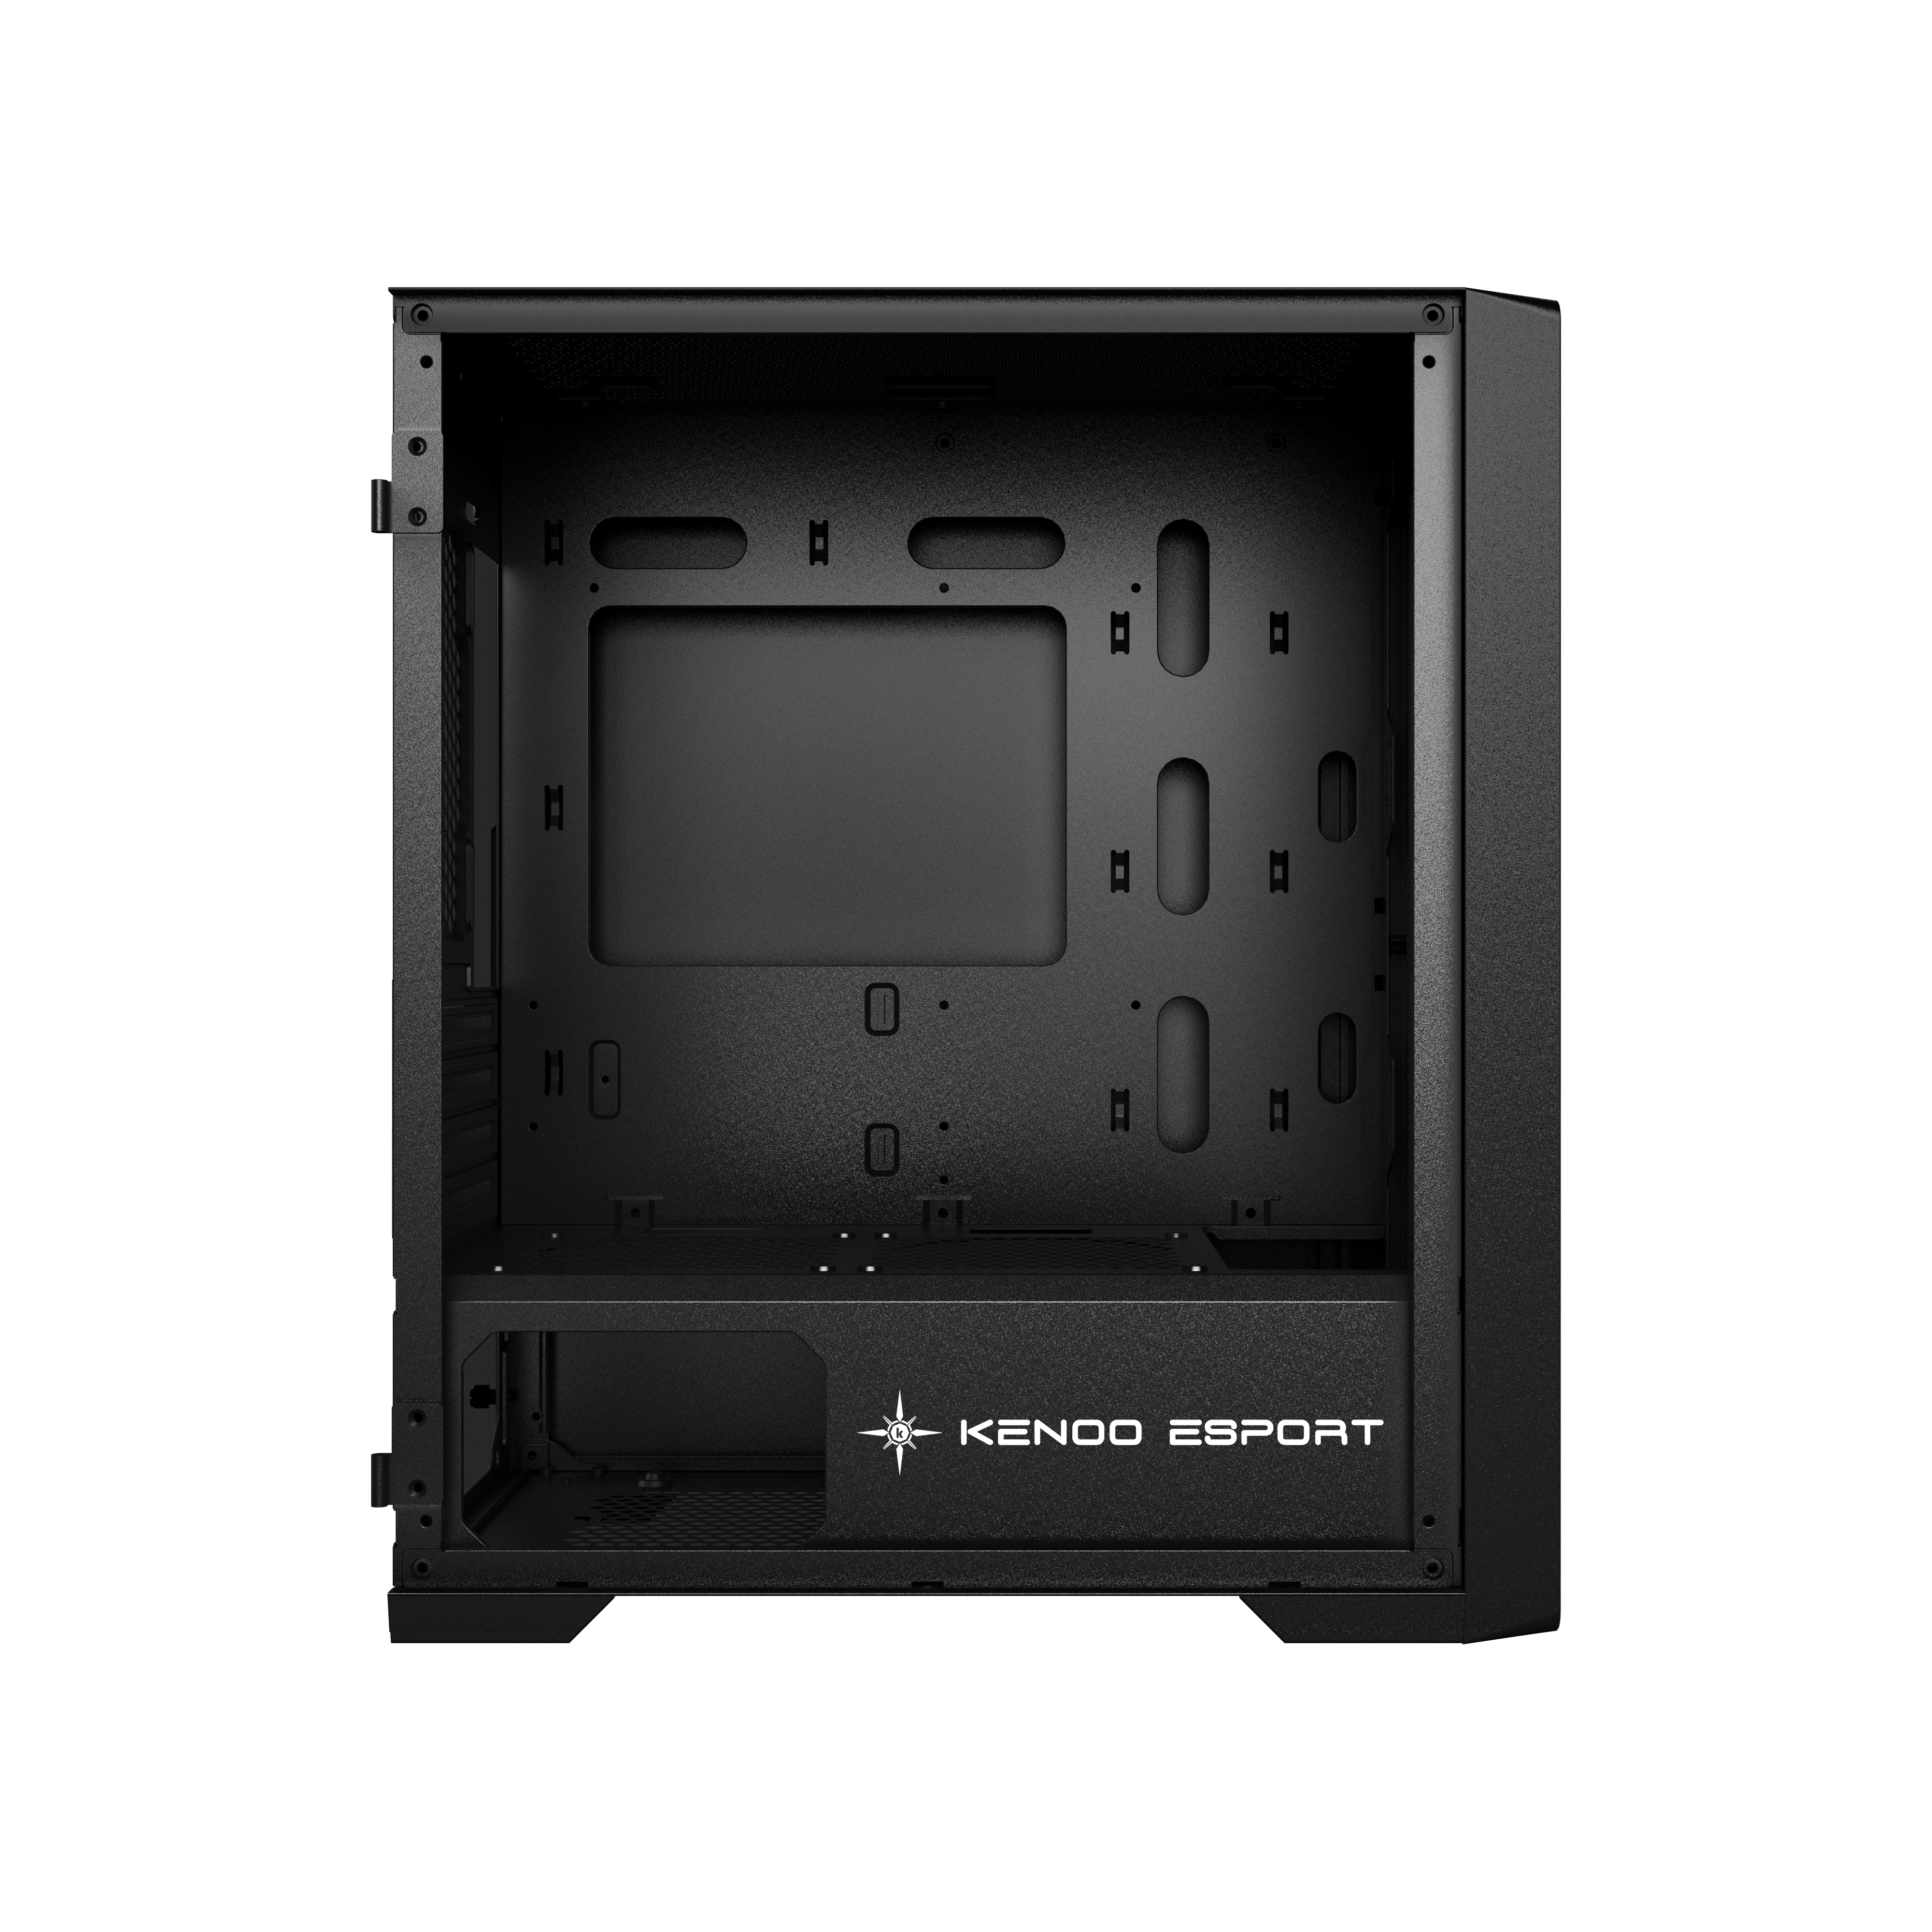 Vỏ máy vi tính KENOO ESPORT MK500 - 3F - Mầu Đen - (Size M-ATX) 